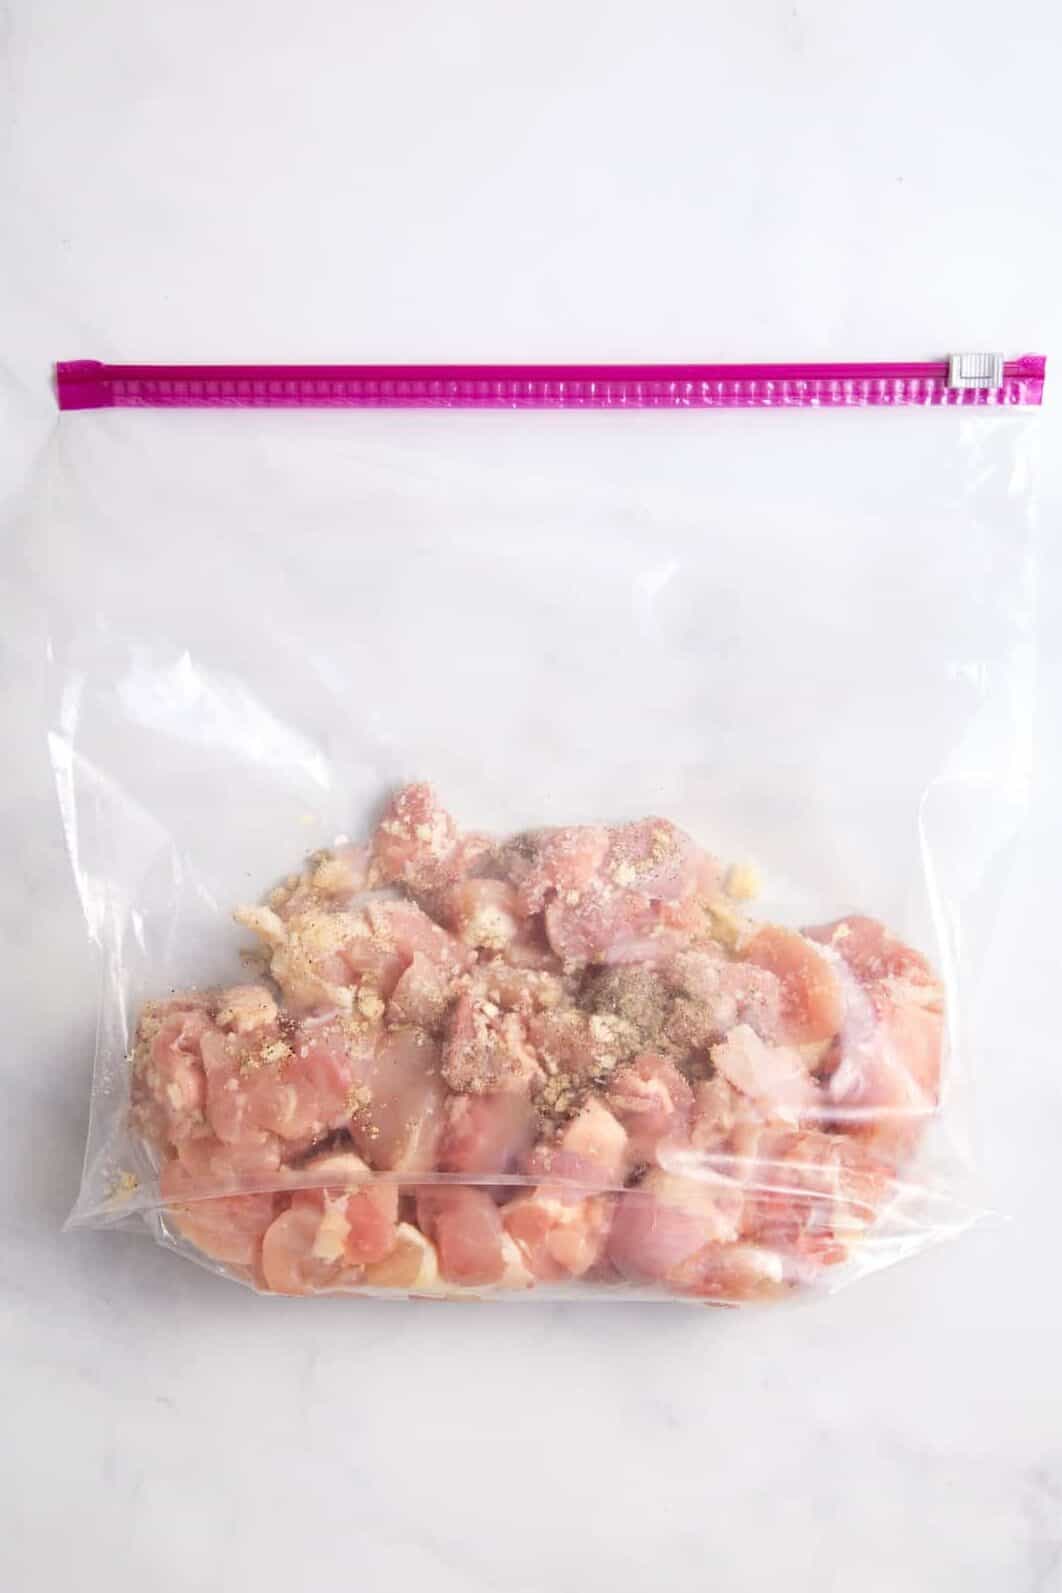 cubed chicken in a ziploc bag with seasonings